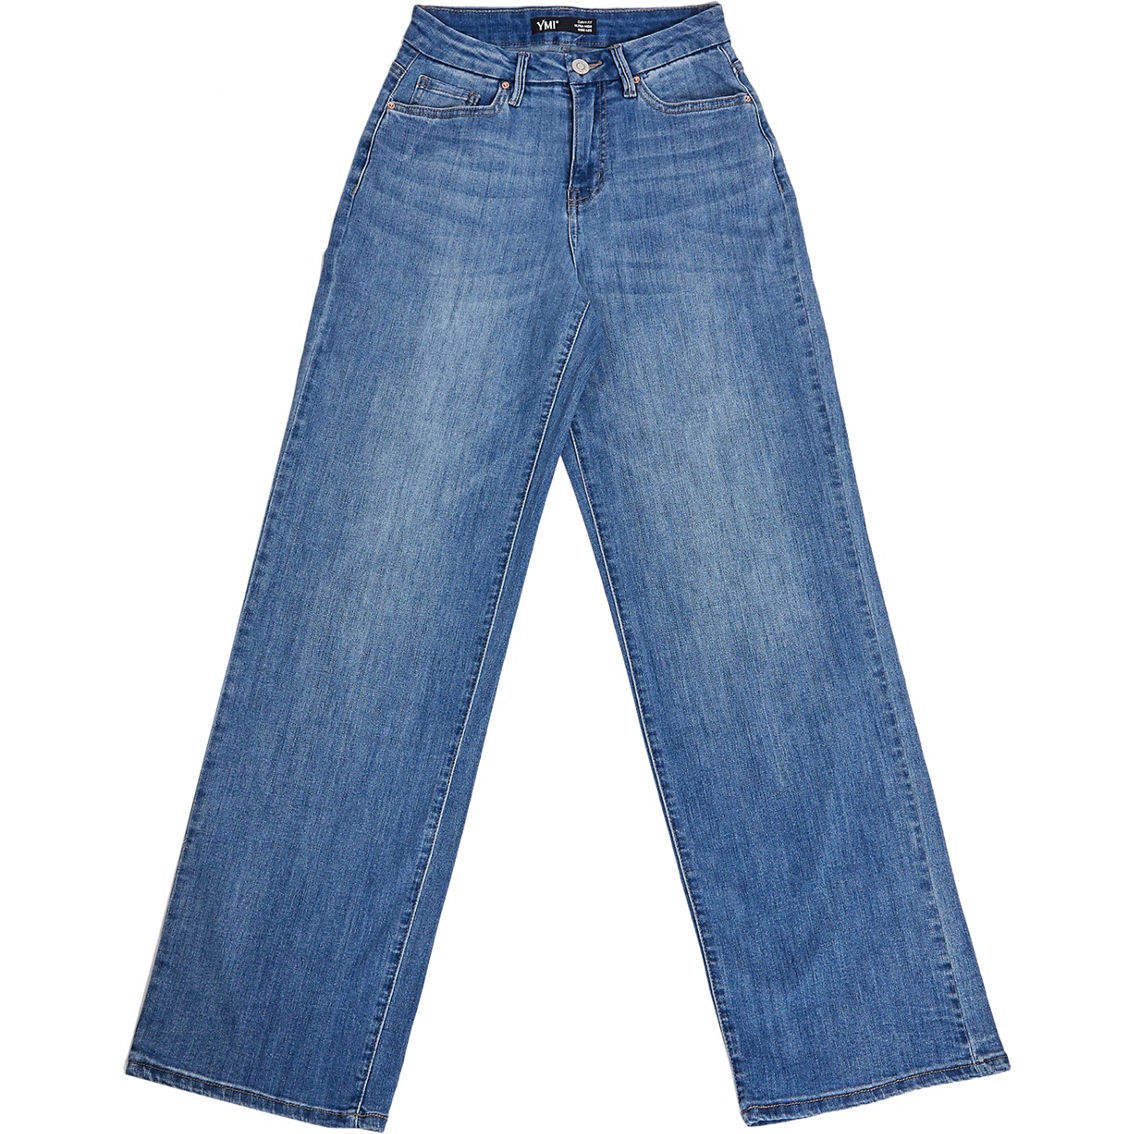 Ymi Jeans Juniors Curvy Wide Leg Jeans | Jeans | Clothing & Accessories ...